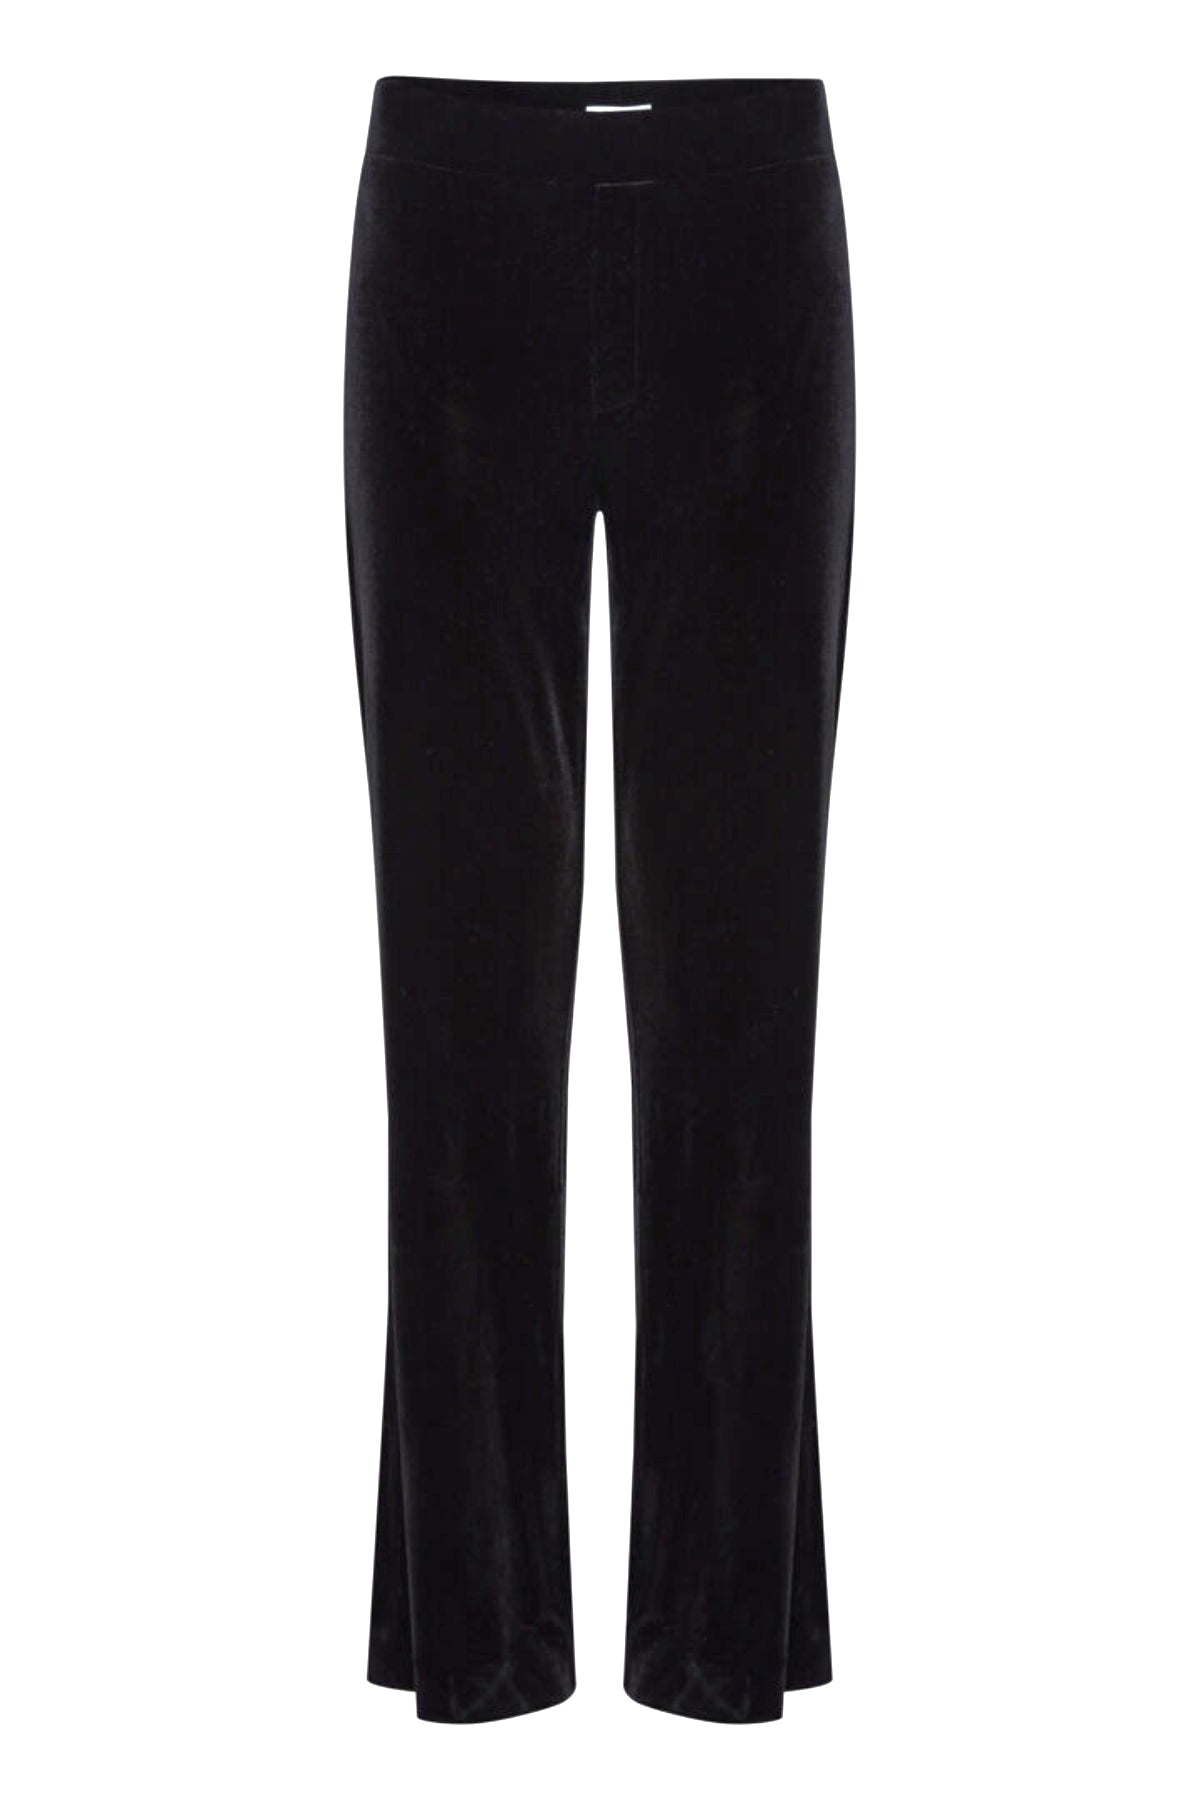 Perlina trousers, black